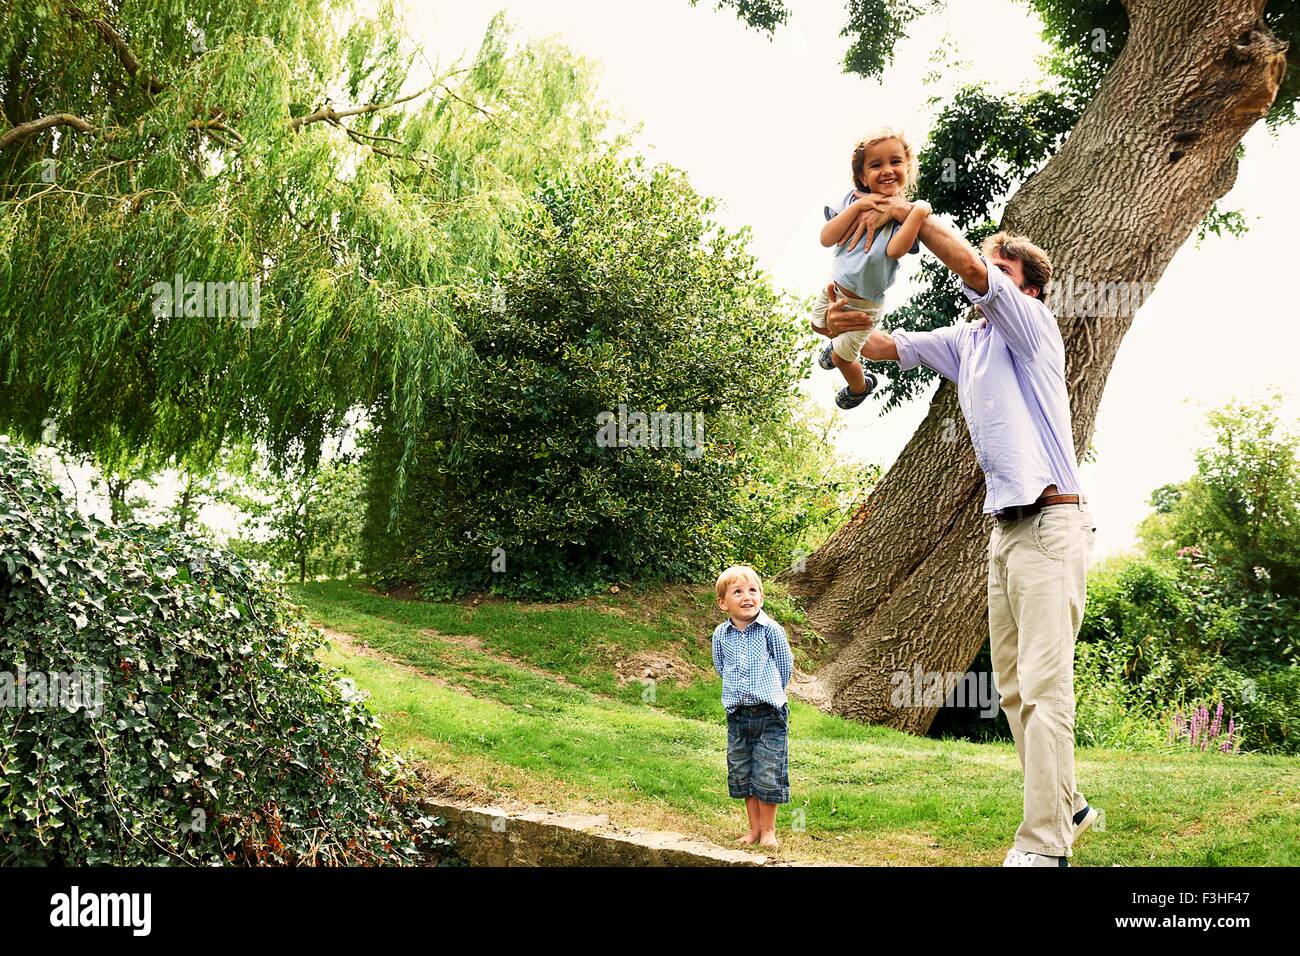 Mature man lifting up daughter in garden Stock Photo